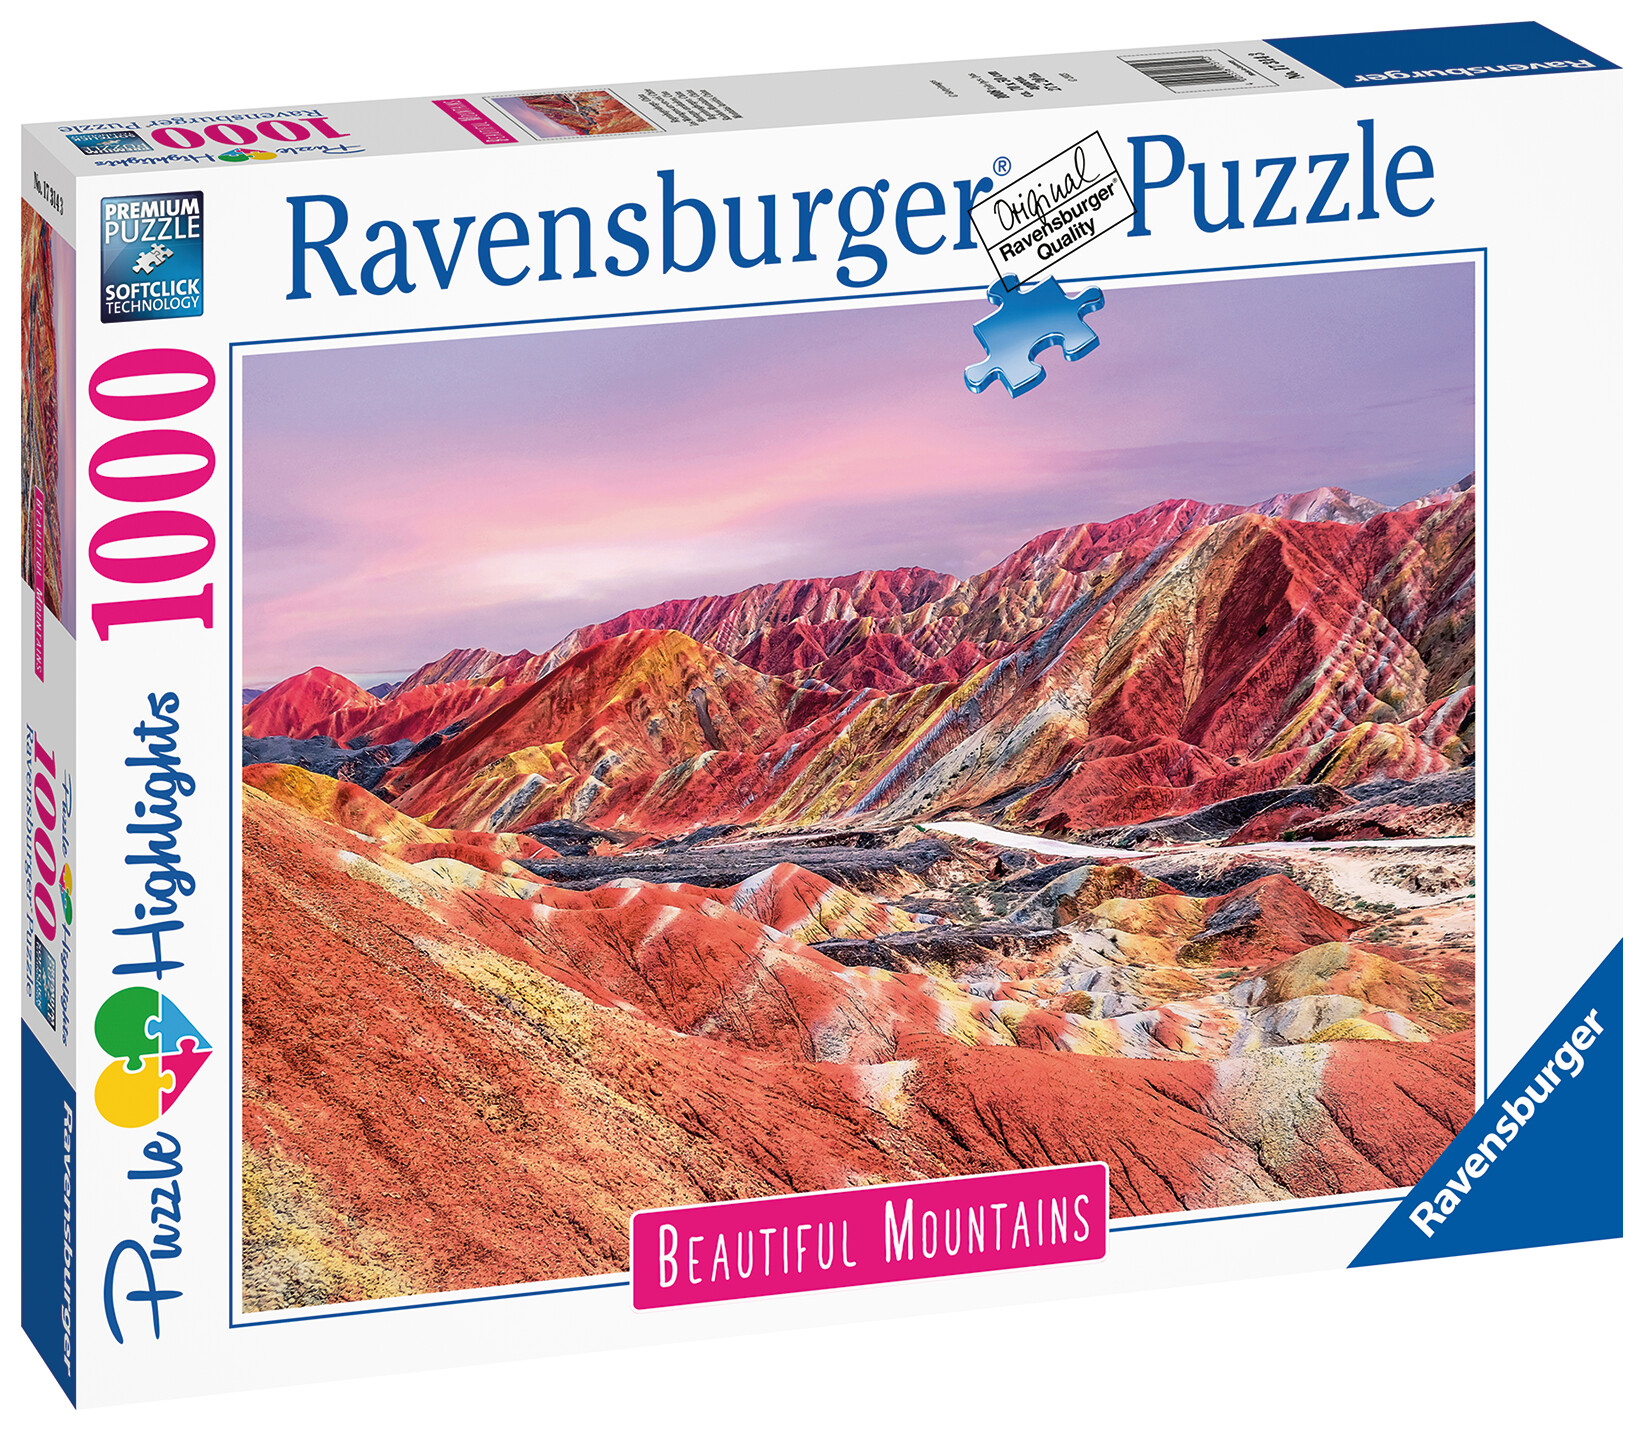 Ravensburger - puzzle montagne arcobaleno, cina, collezione beautiful mountains, 1000 pezzi, puzzle adulti - RAVENSBURGER